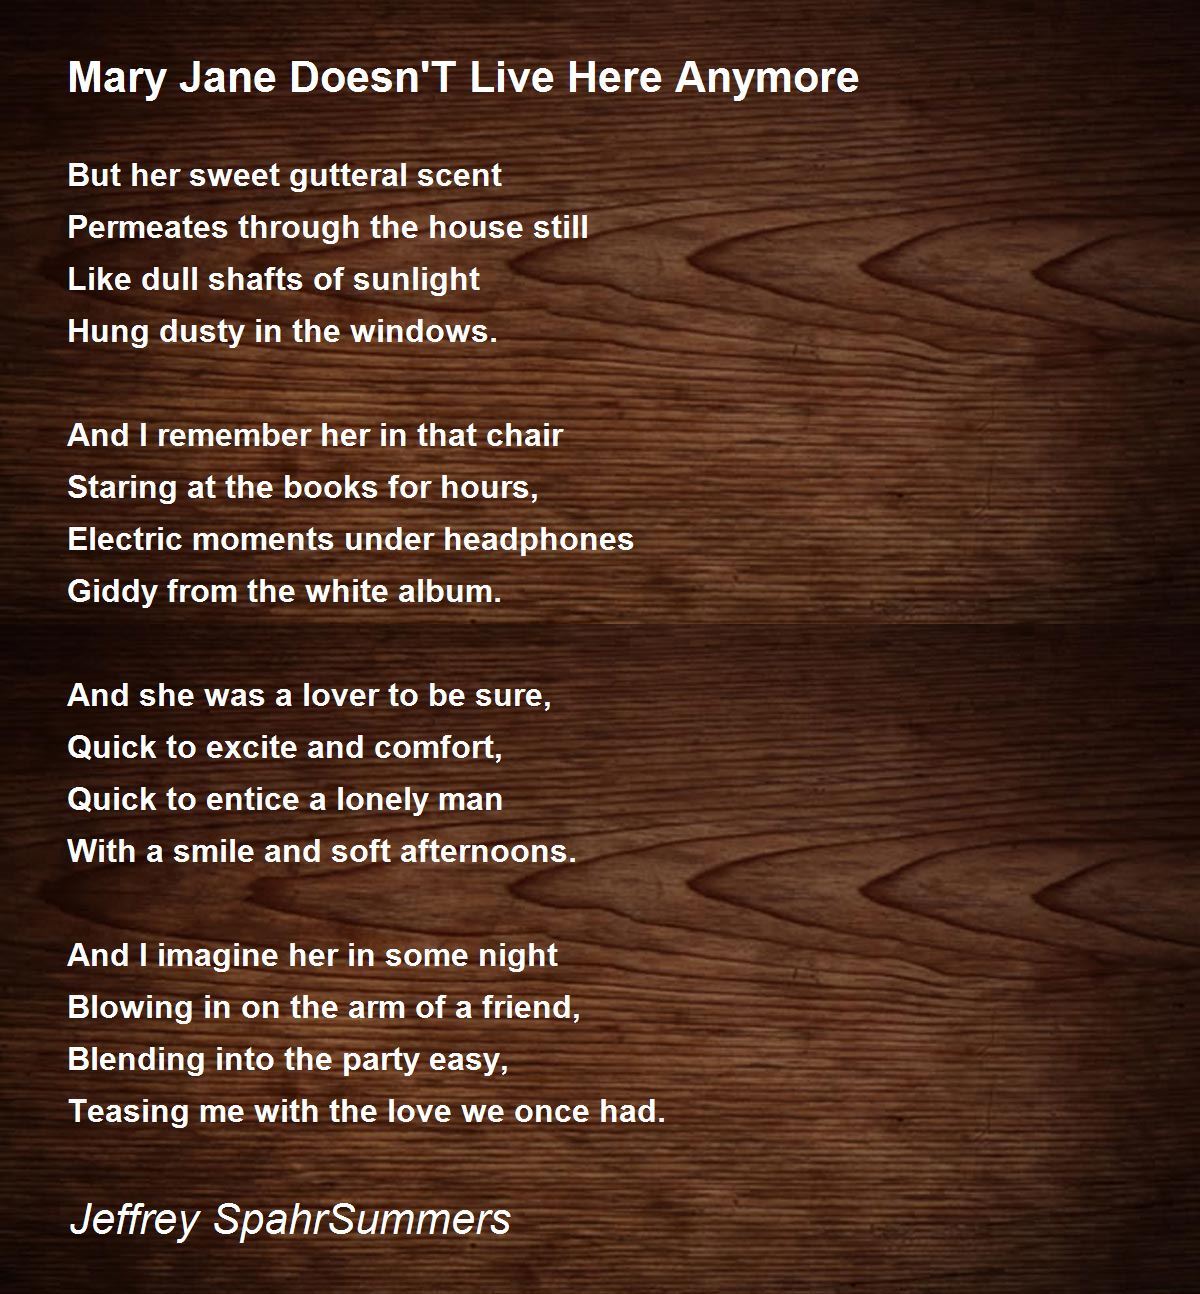 Mary Jane teases